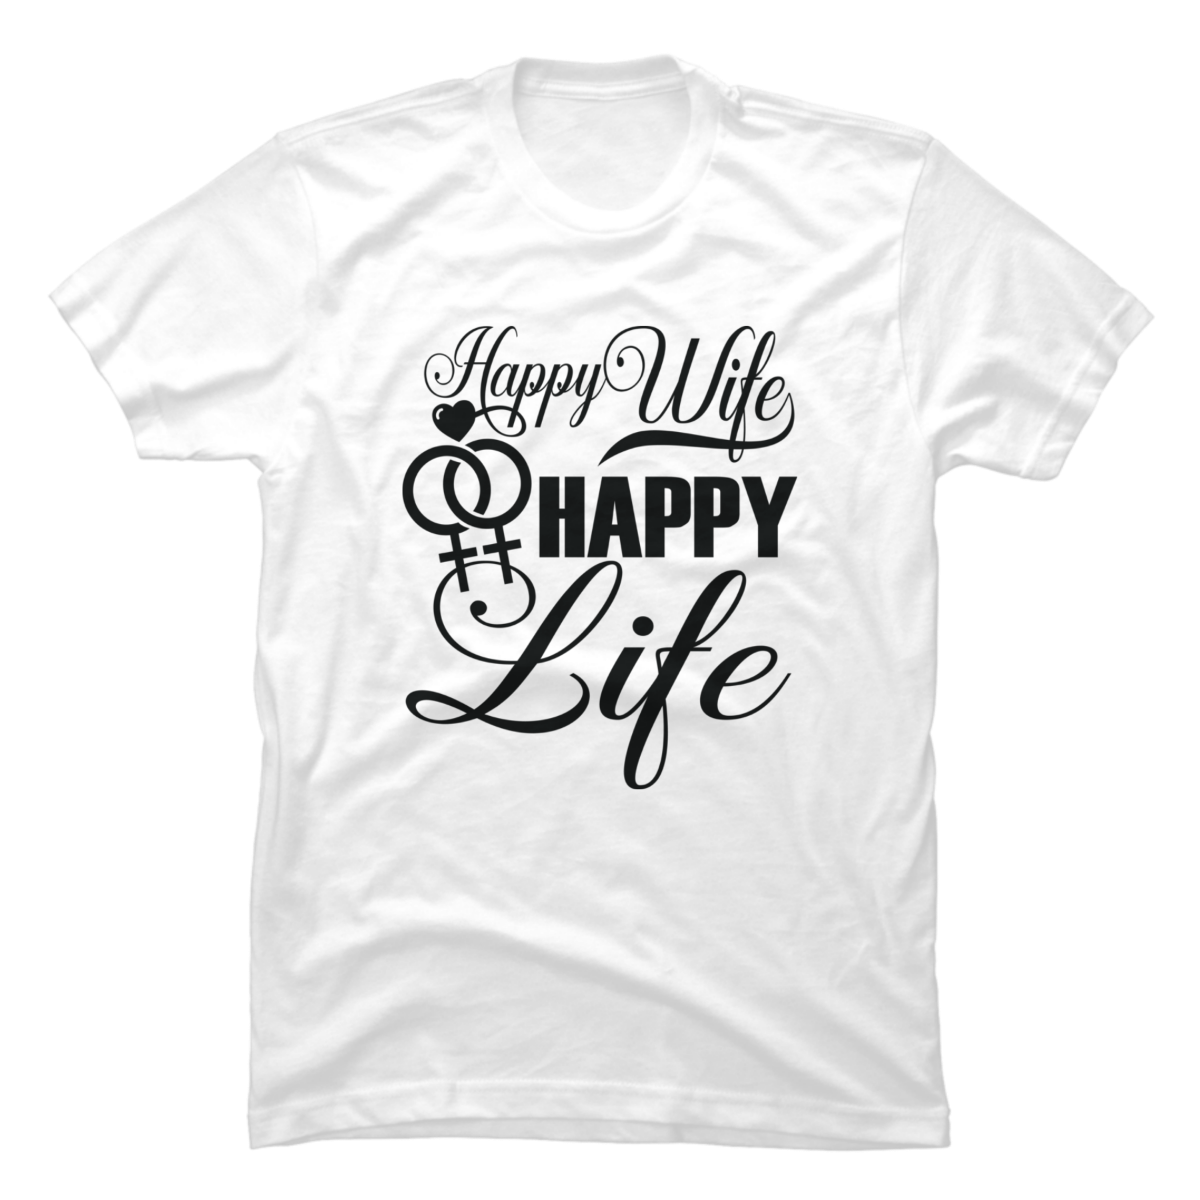 happy wife happy life shirts